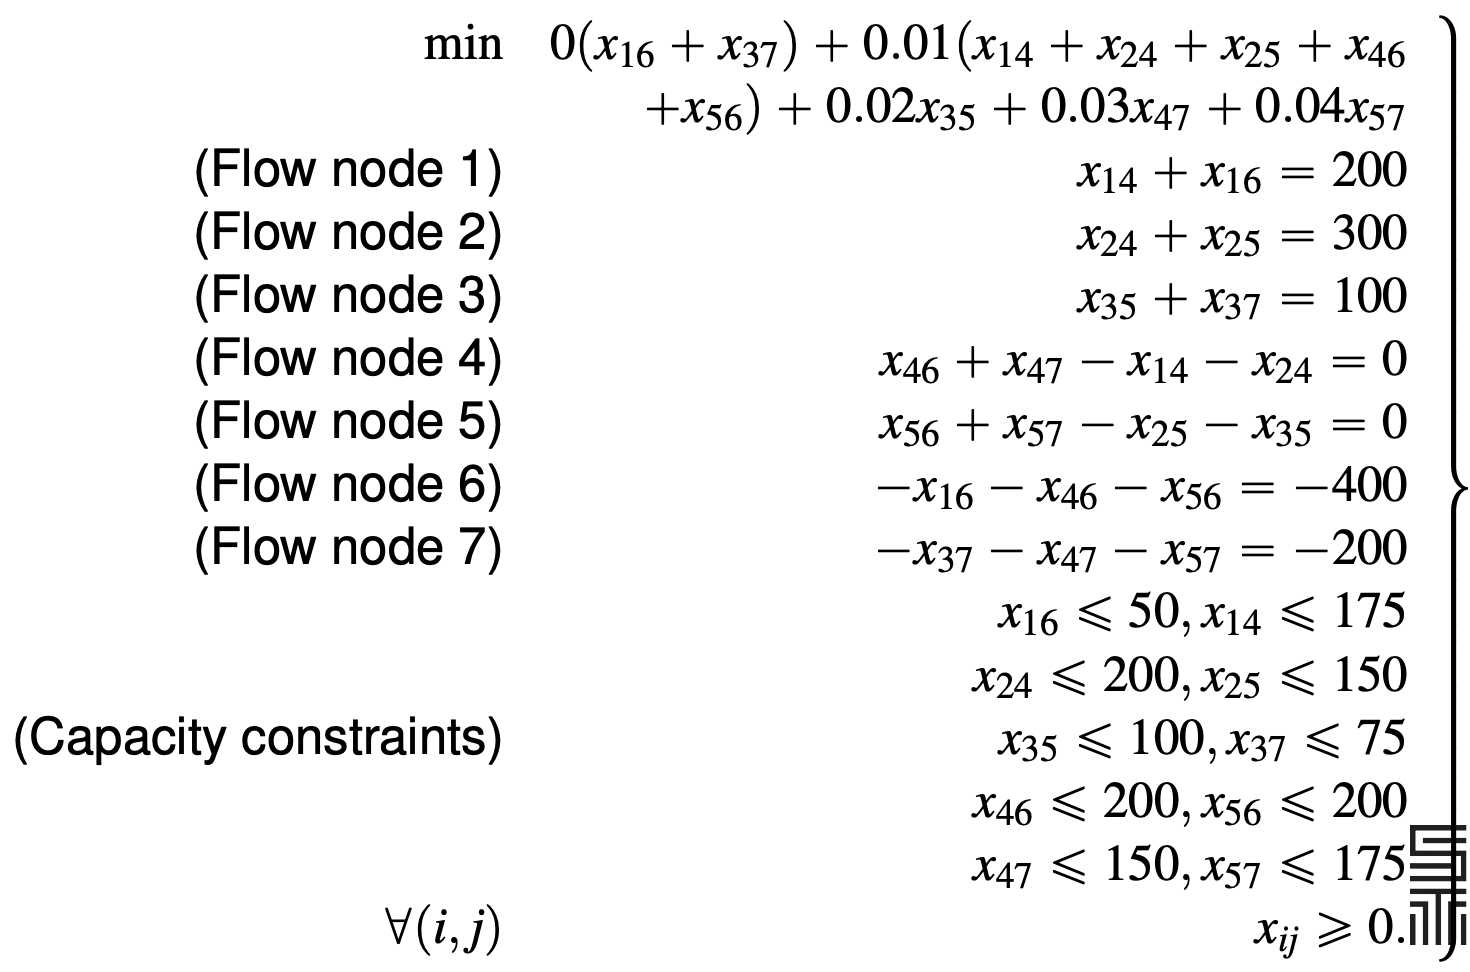 min-cost-flow-formulation